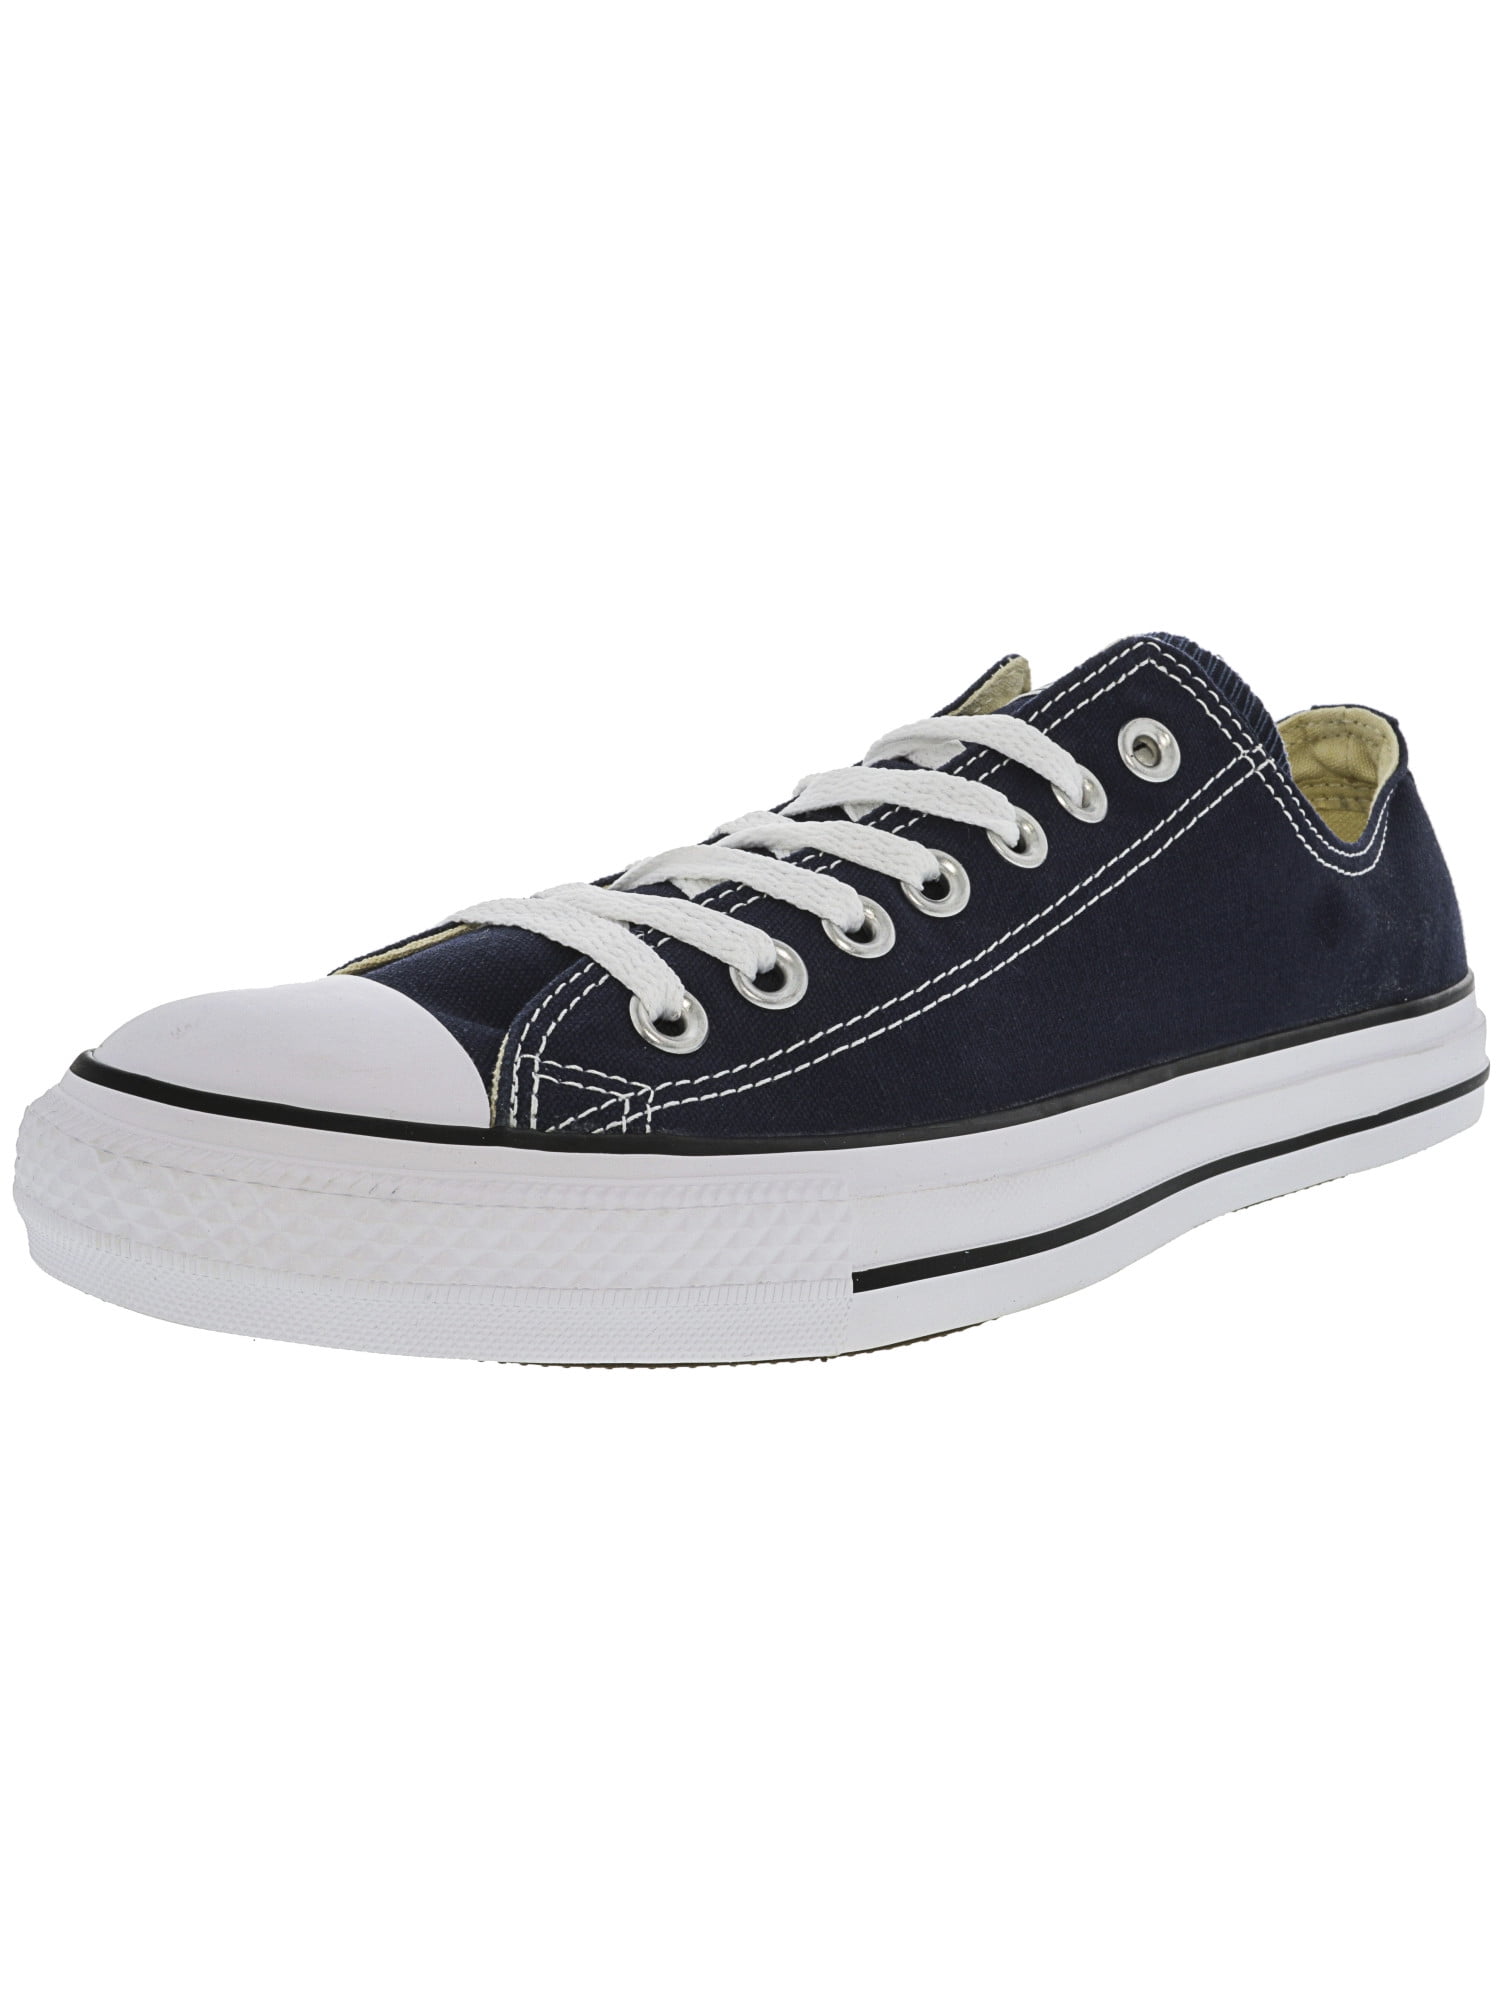 Converse Chuck All Star Ox Navy Ankle-High Fashion Sneaker - 7M - Walmart.com